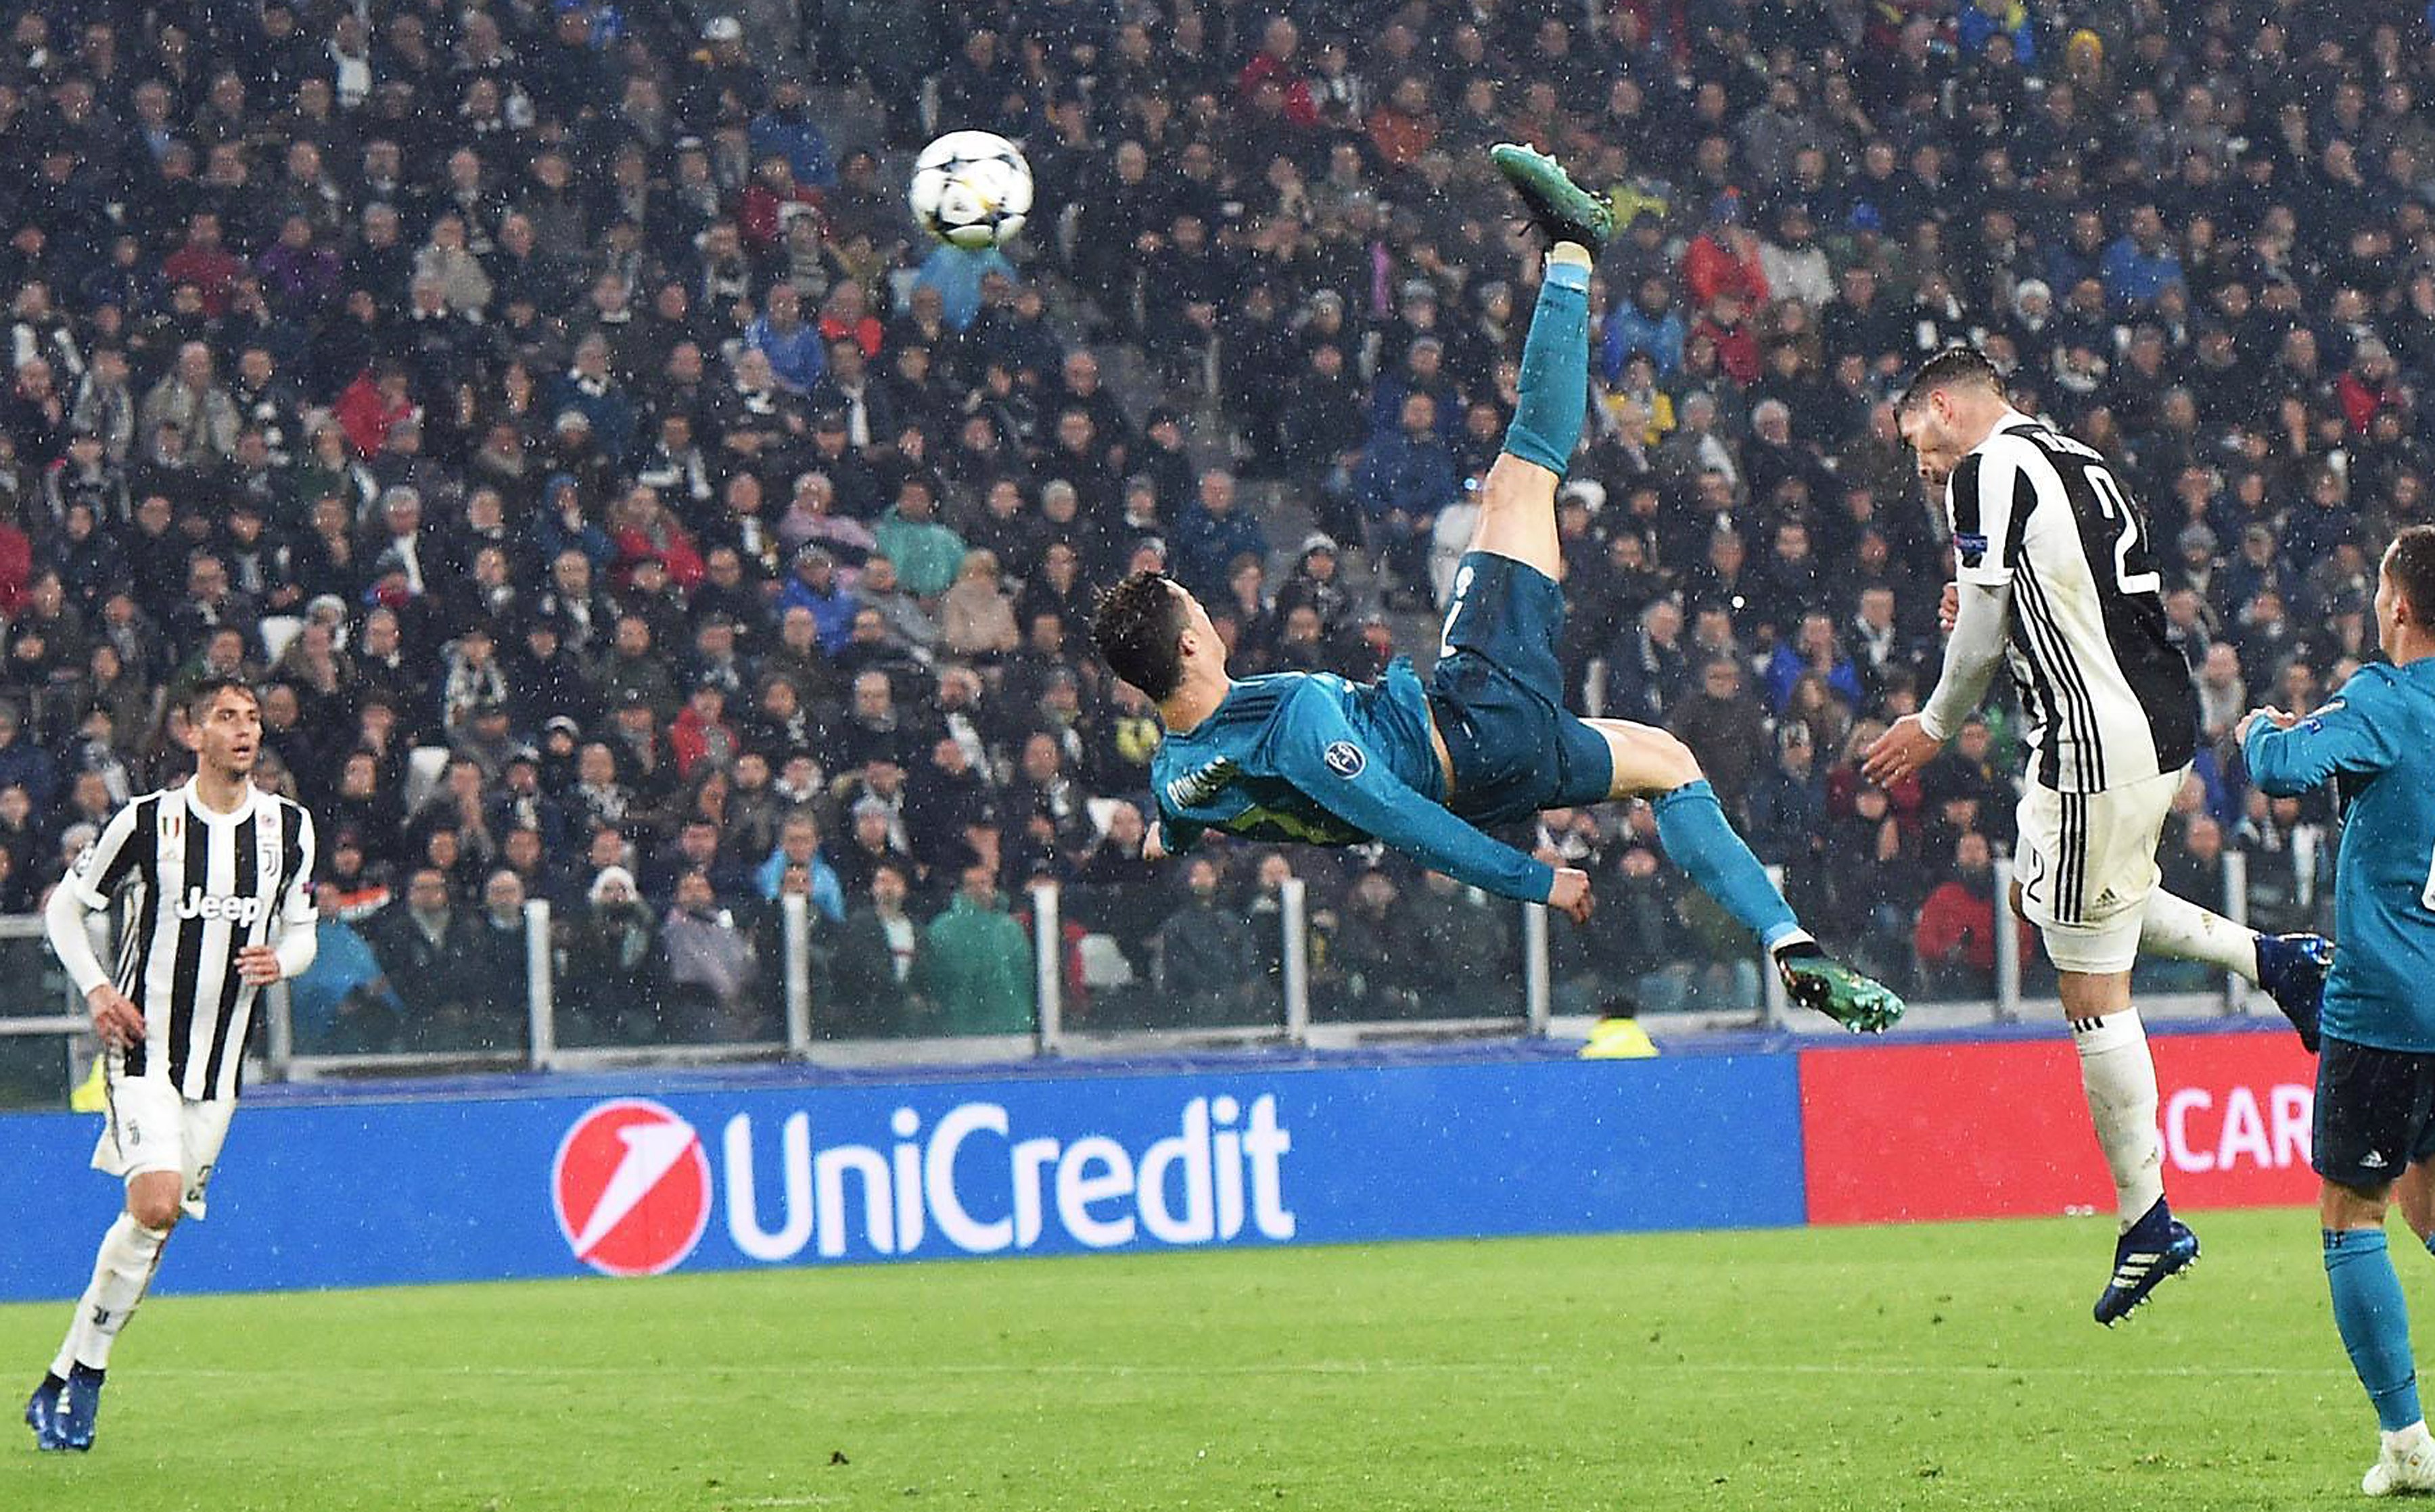 Cristiano Ronaldo scored an amazing goal against Juventus in 2018